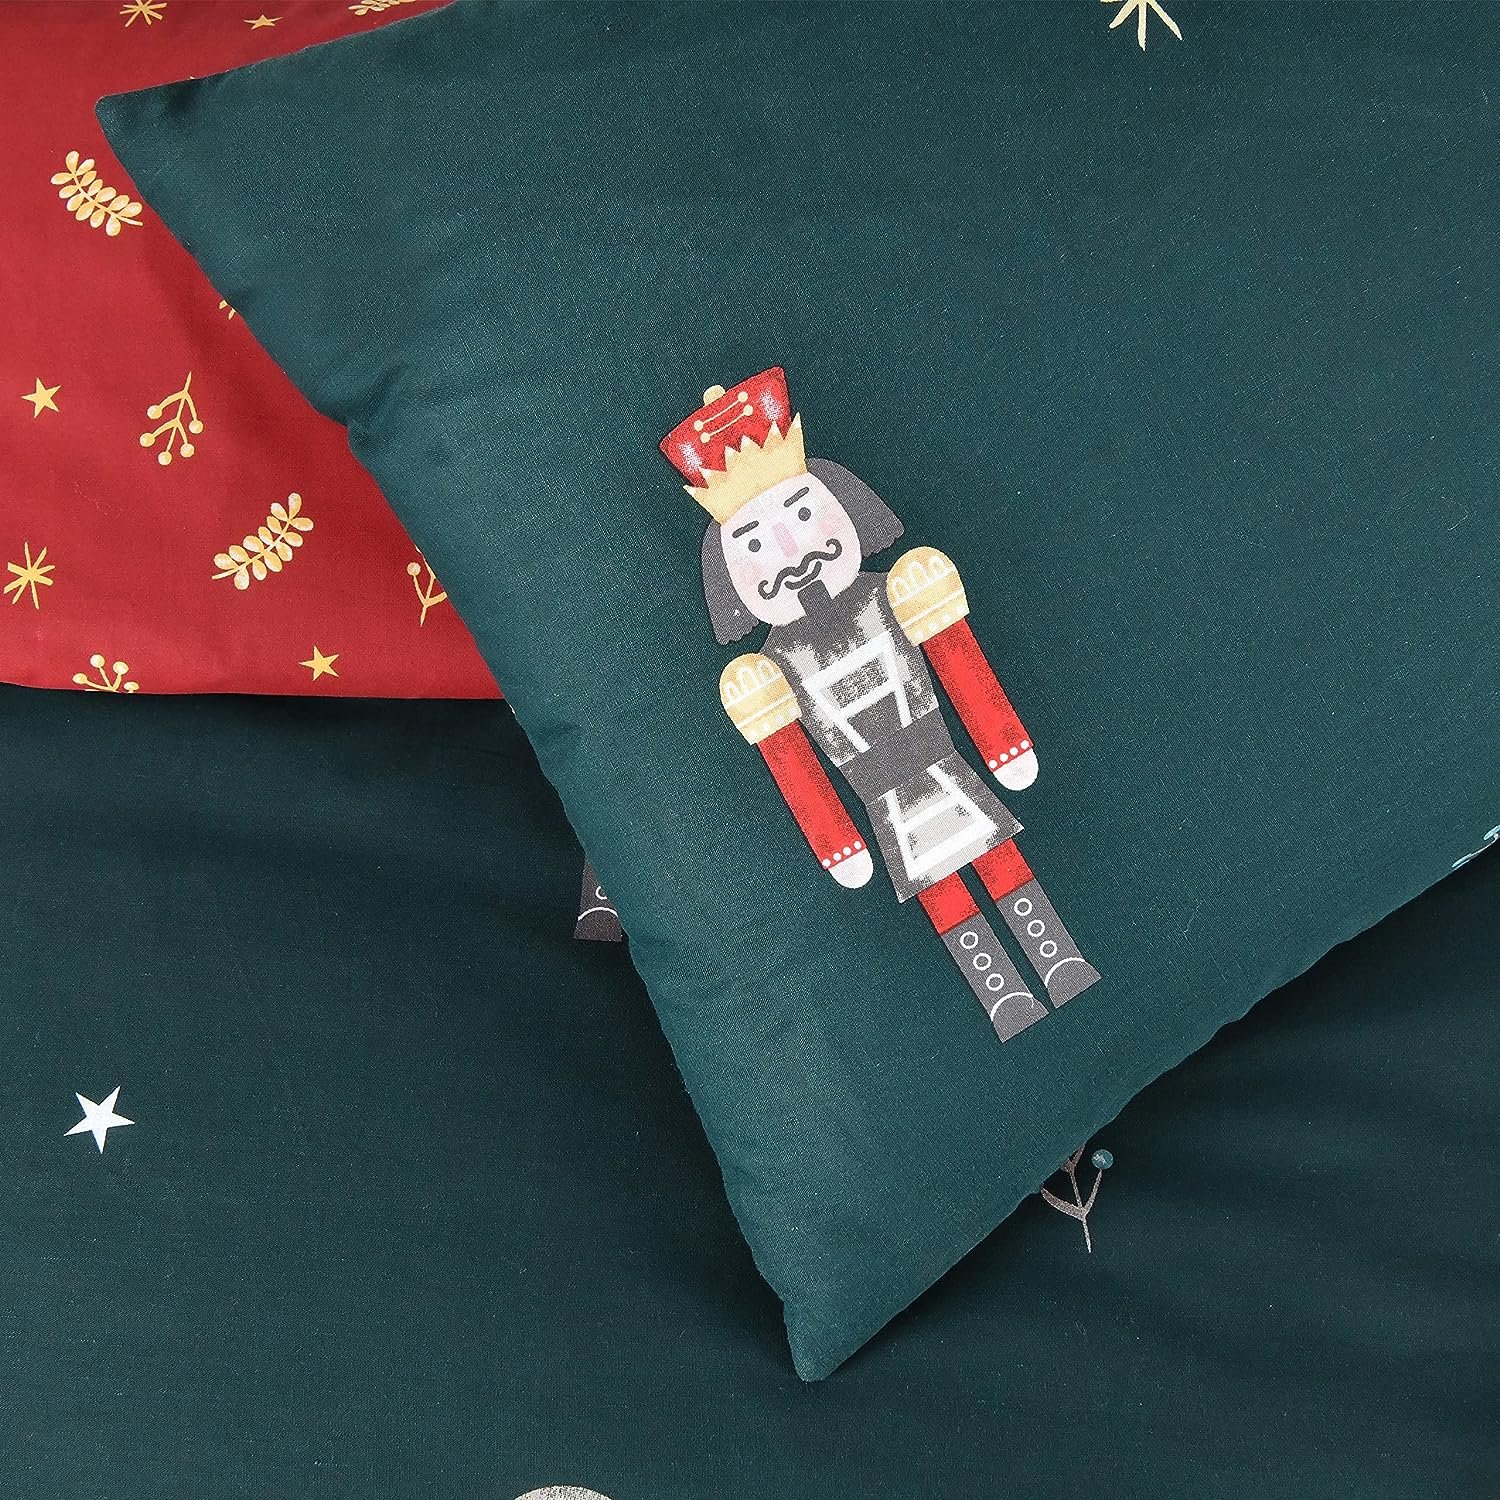 Sleepdown Xmas Nutcracker Green Wine Festive Reversible Duvet Cover Quilt Bedding Set with Pillowcases Soft Easy Care Bed Linen – King (230cm x 220cm) Review